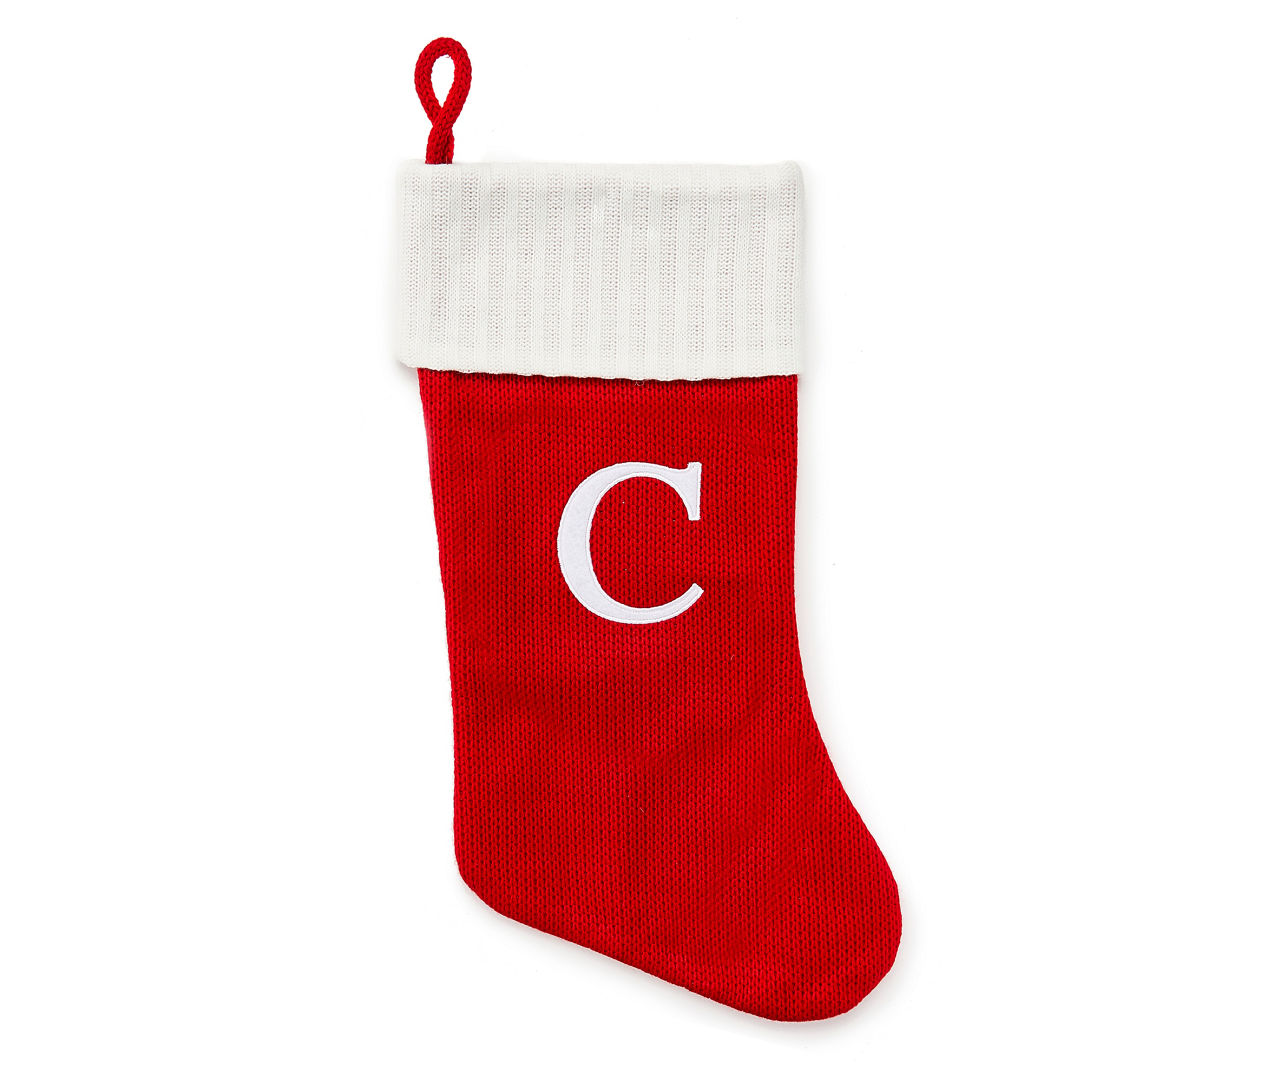 "C" Monogram Red Knit Stocking with White Trim